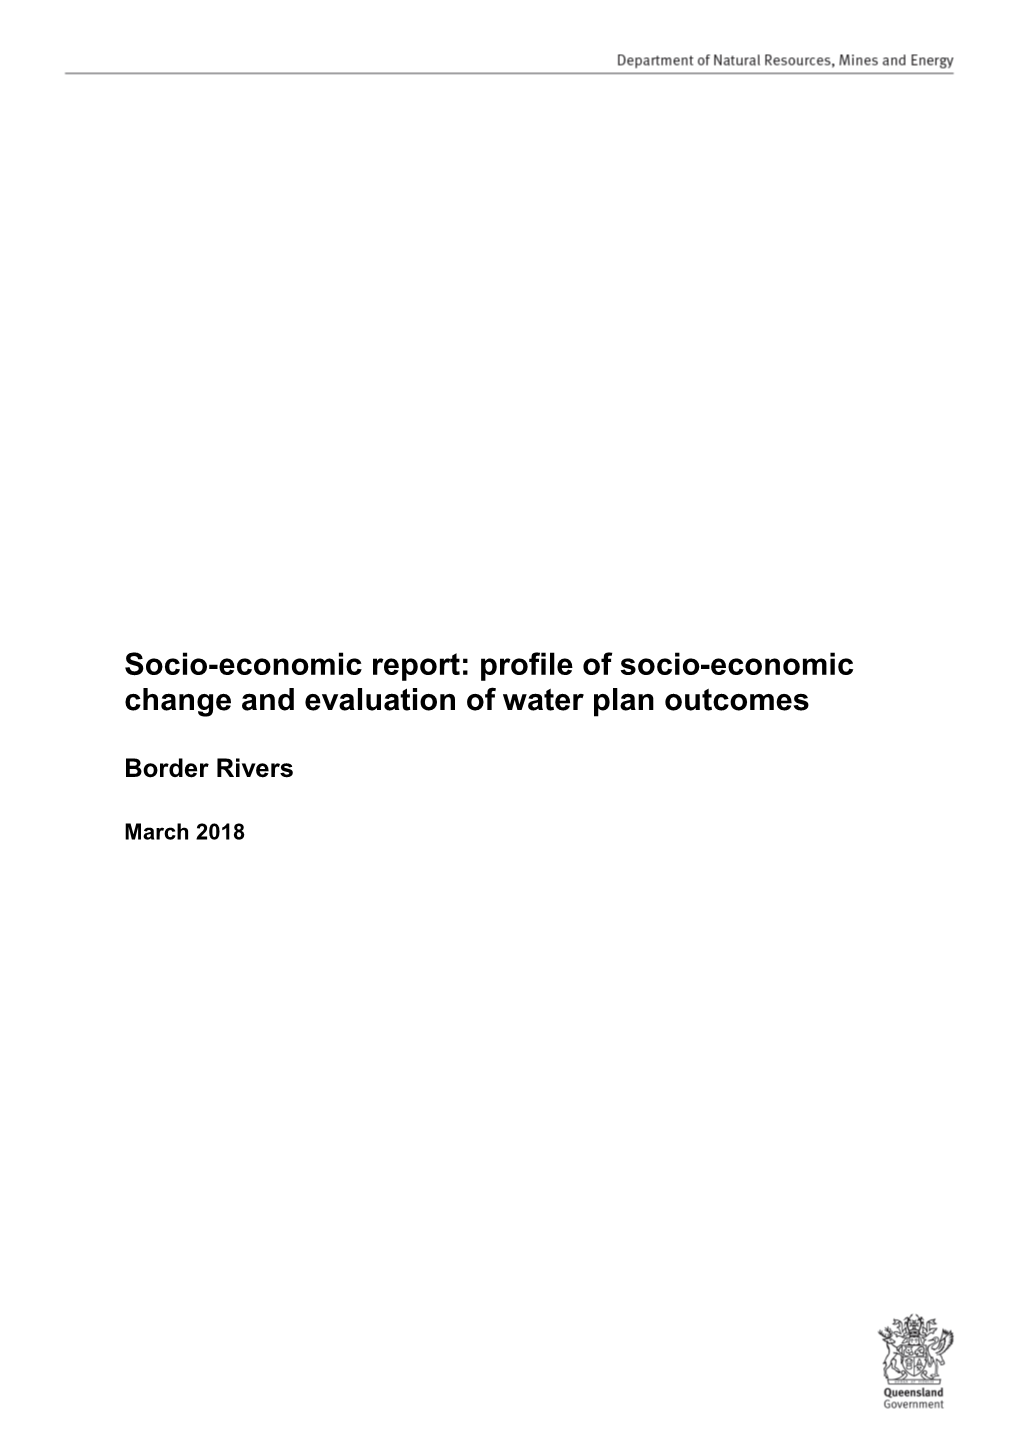 Socio-Economic Report: Profile of Socio-Economic Change and Evaluation of Water Plan Outcomes